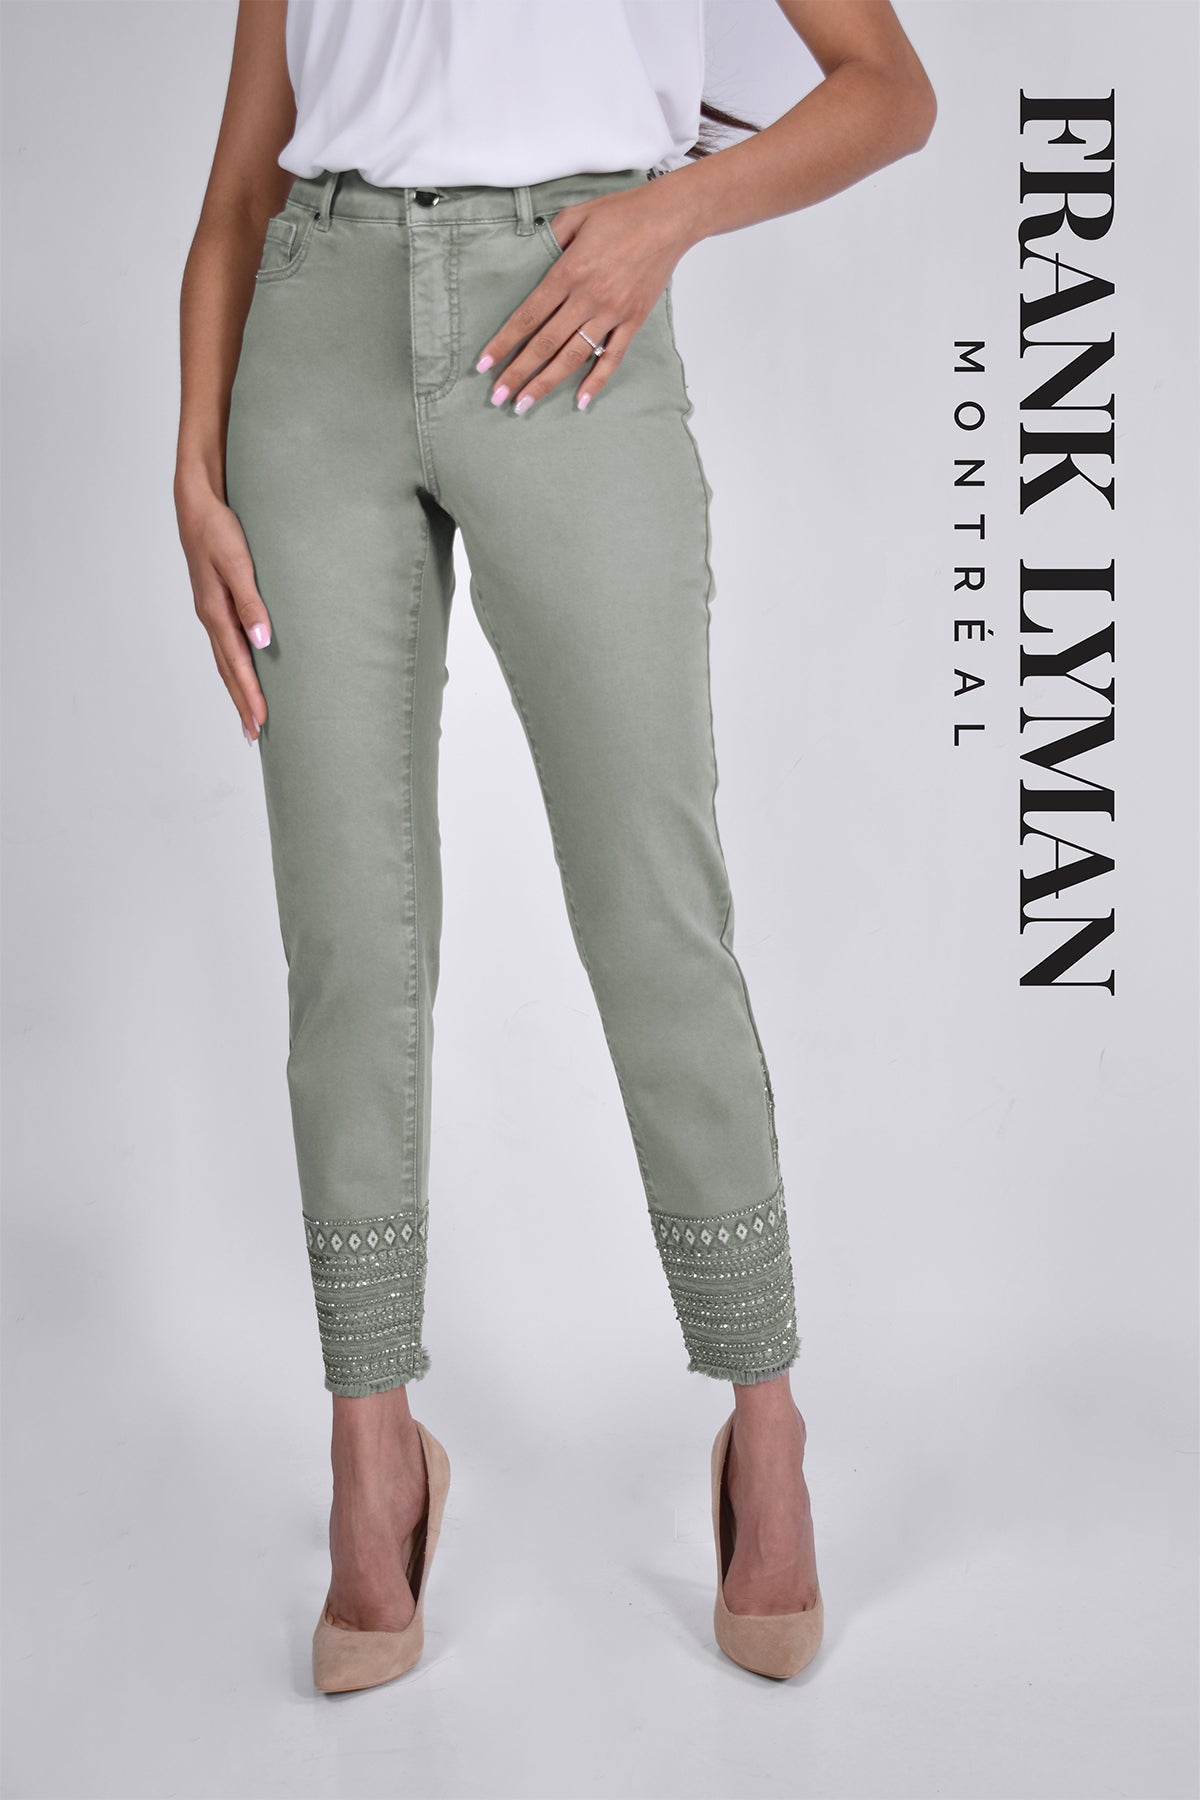 Frank Lyman Montreal Jeans-Buy Frank Lyman Montreal Jeans Online-Frank Lyman Montreal Online Jeans Shop